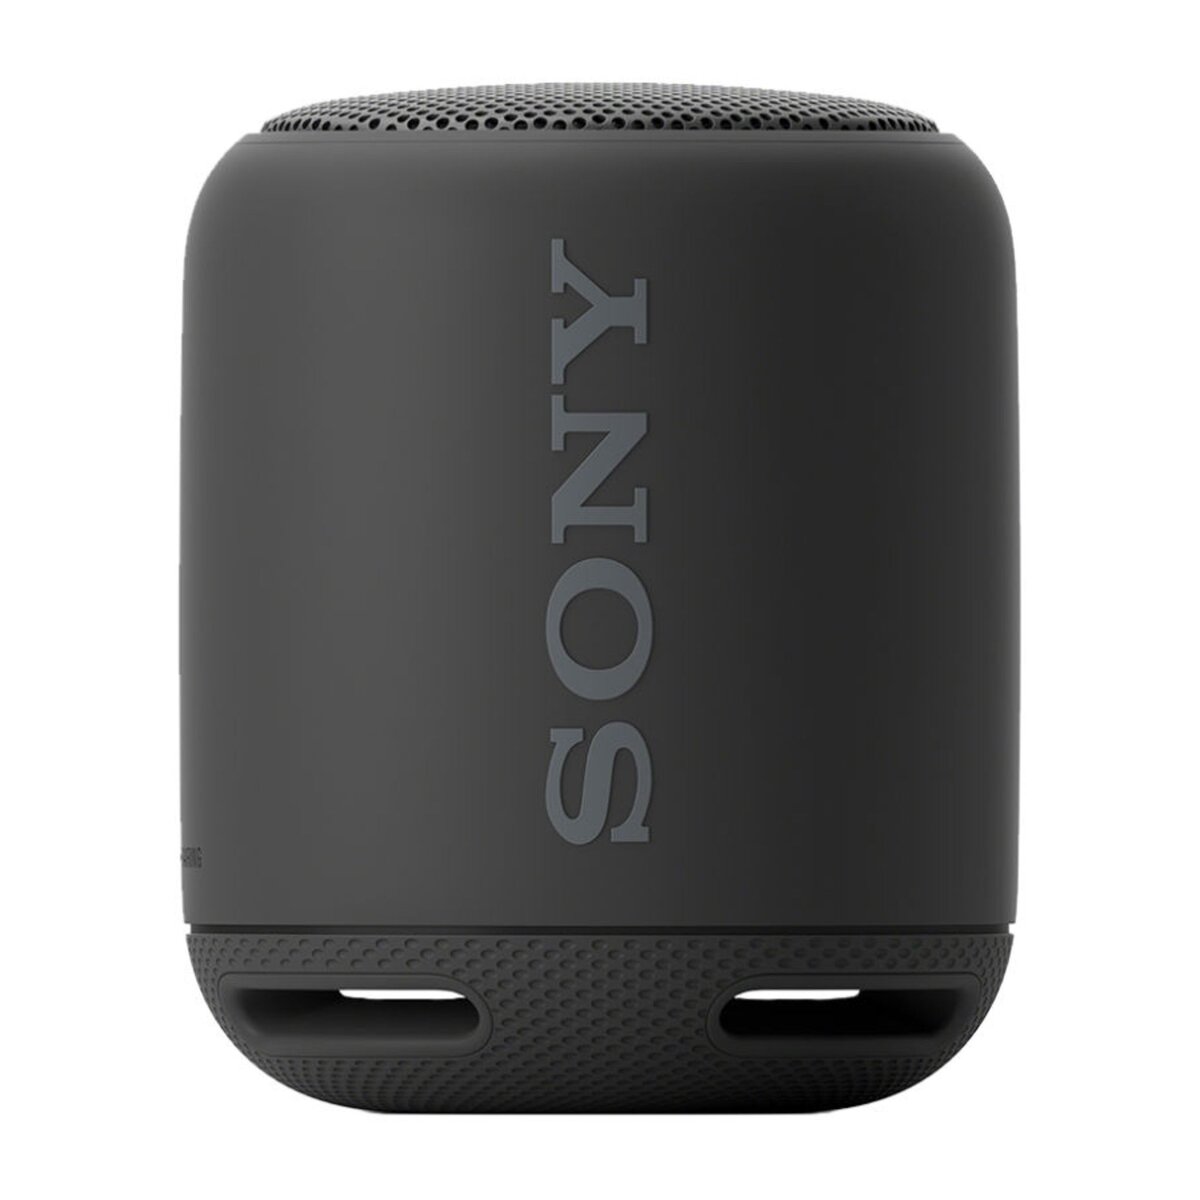 SONY Extra Bass SRS-XB10 - Noire - Enceinte portable